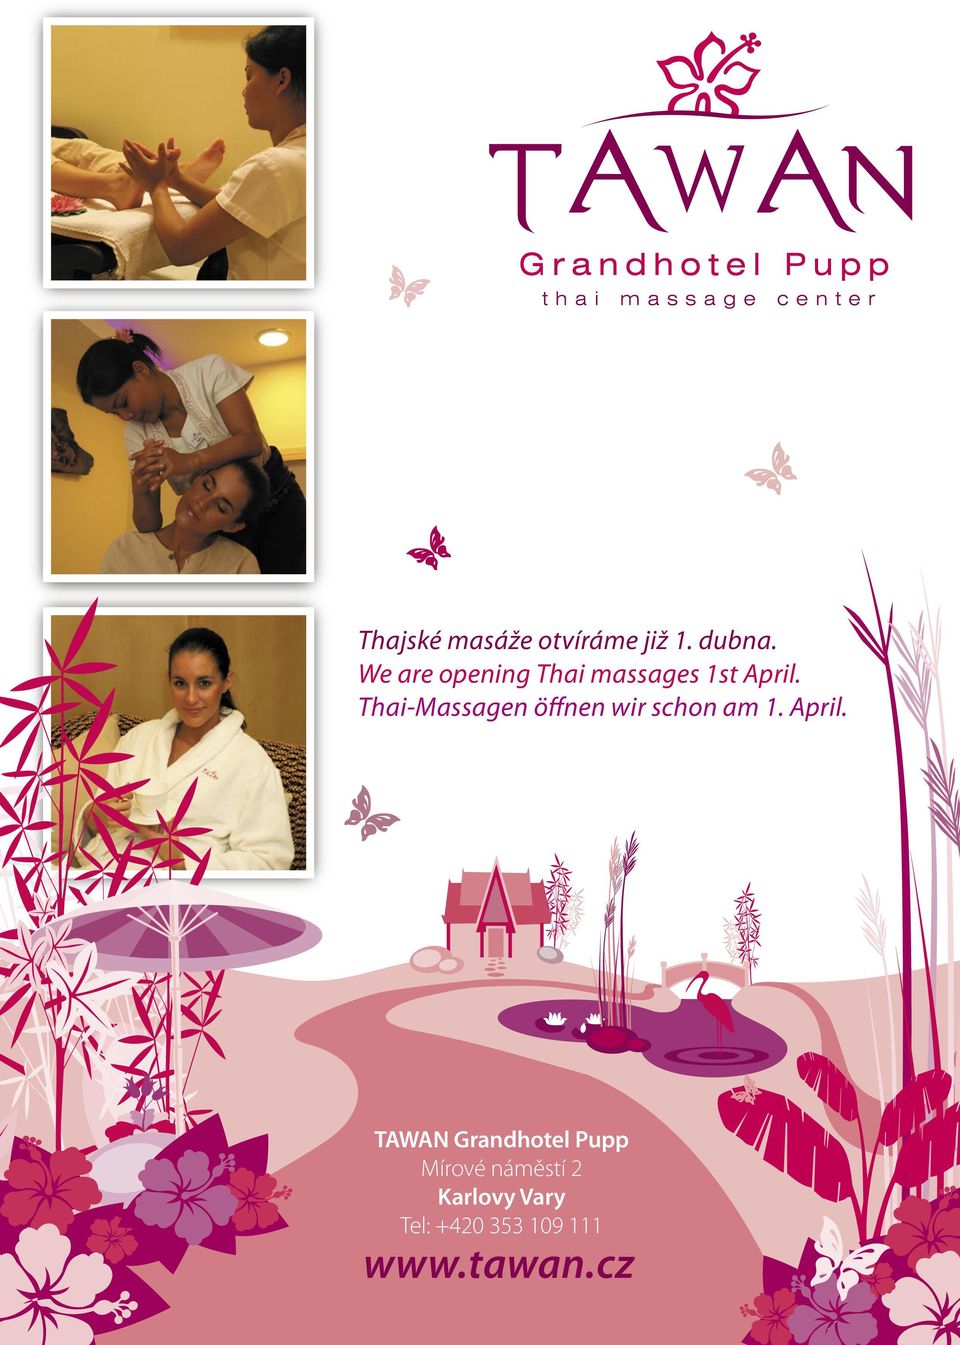 Thai-Massagen öffnen wir schon am 1. April.